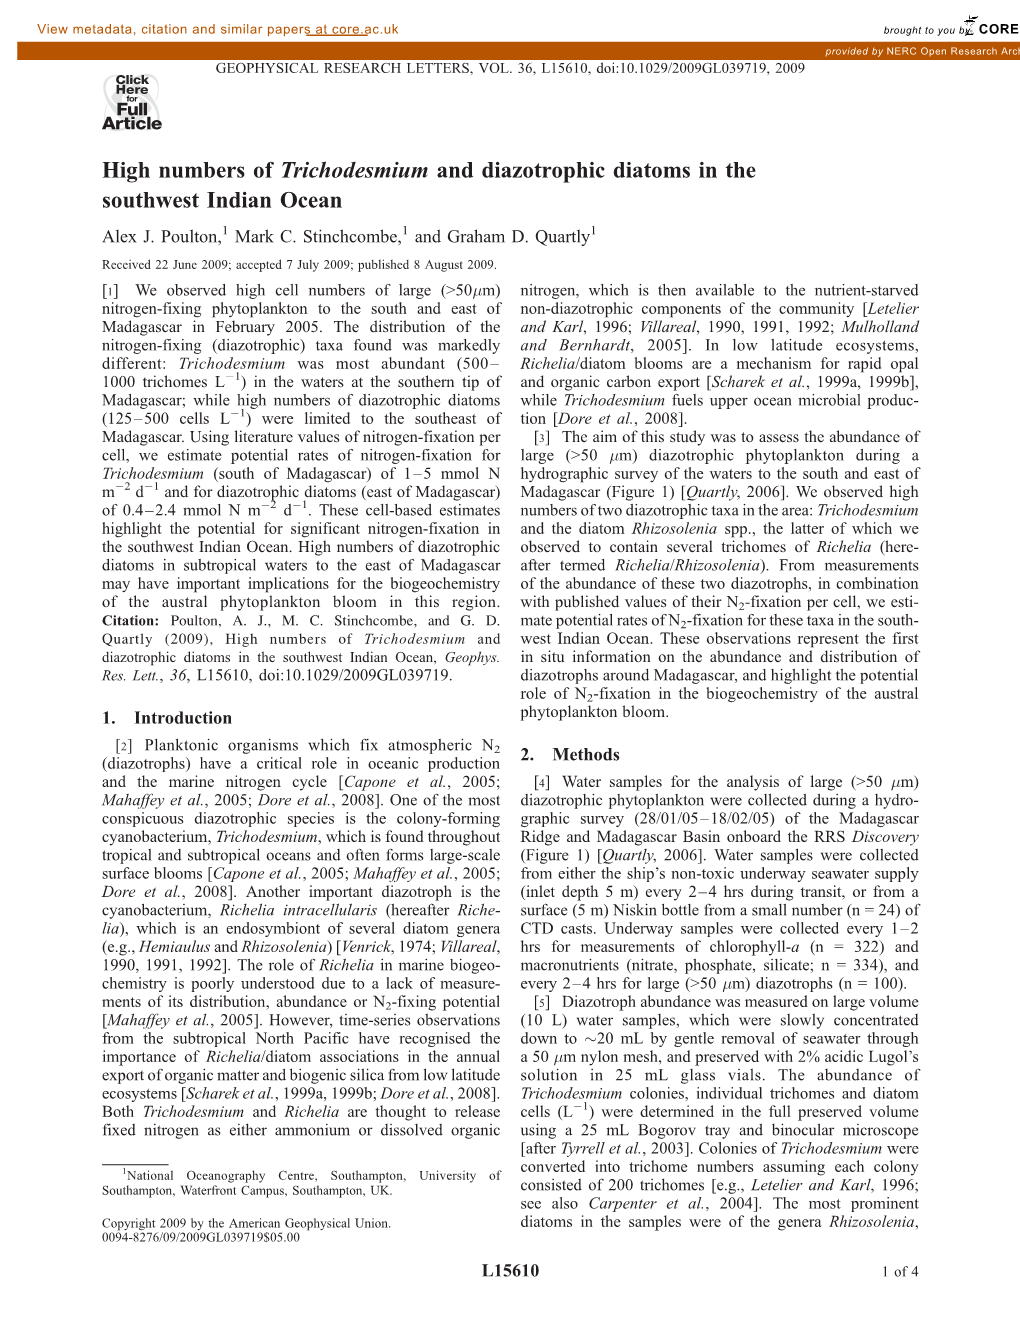 High Numbers of Trichodesmium and Diazotrophic Diatoms in the Southwest Indian Ocean Alex J